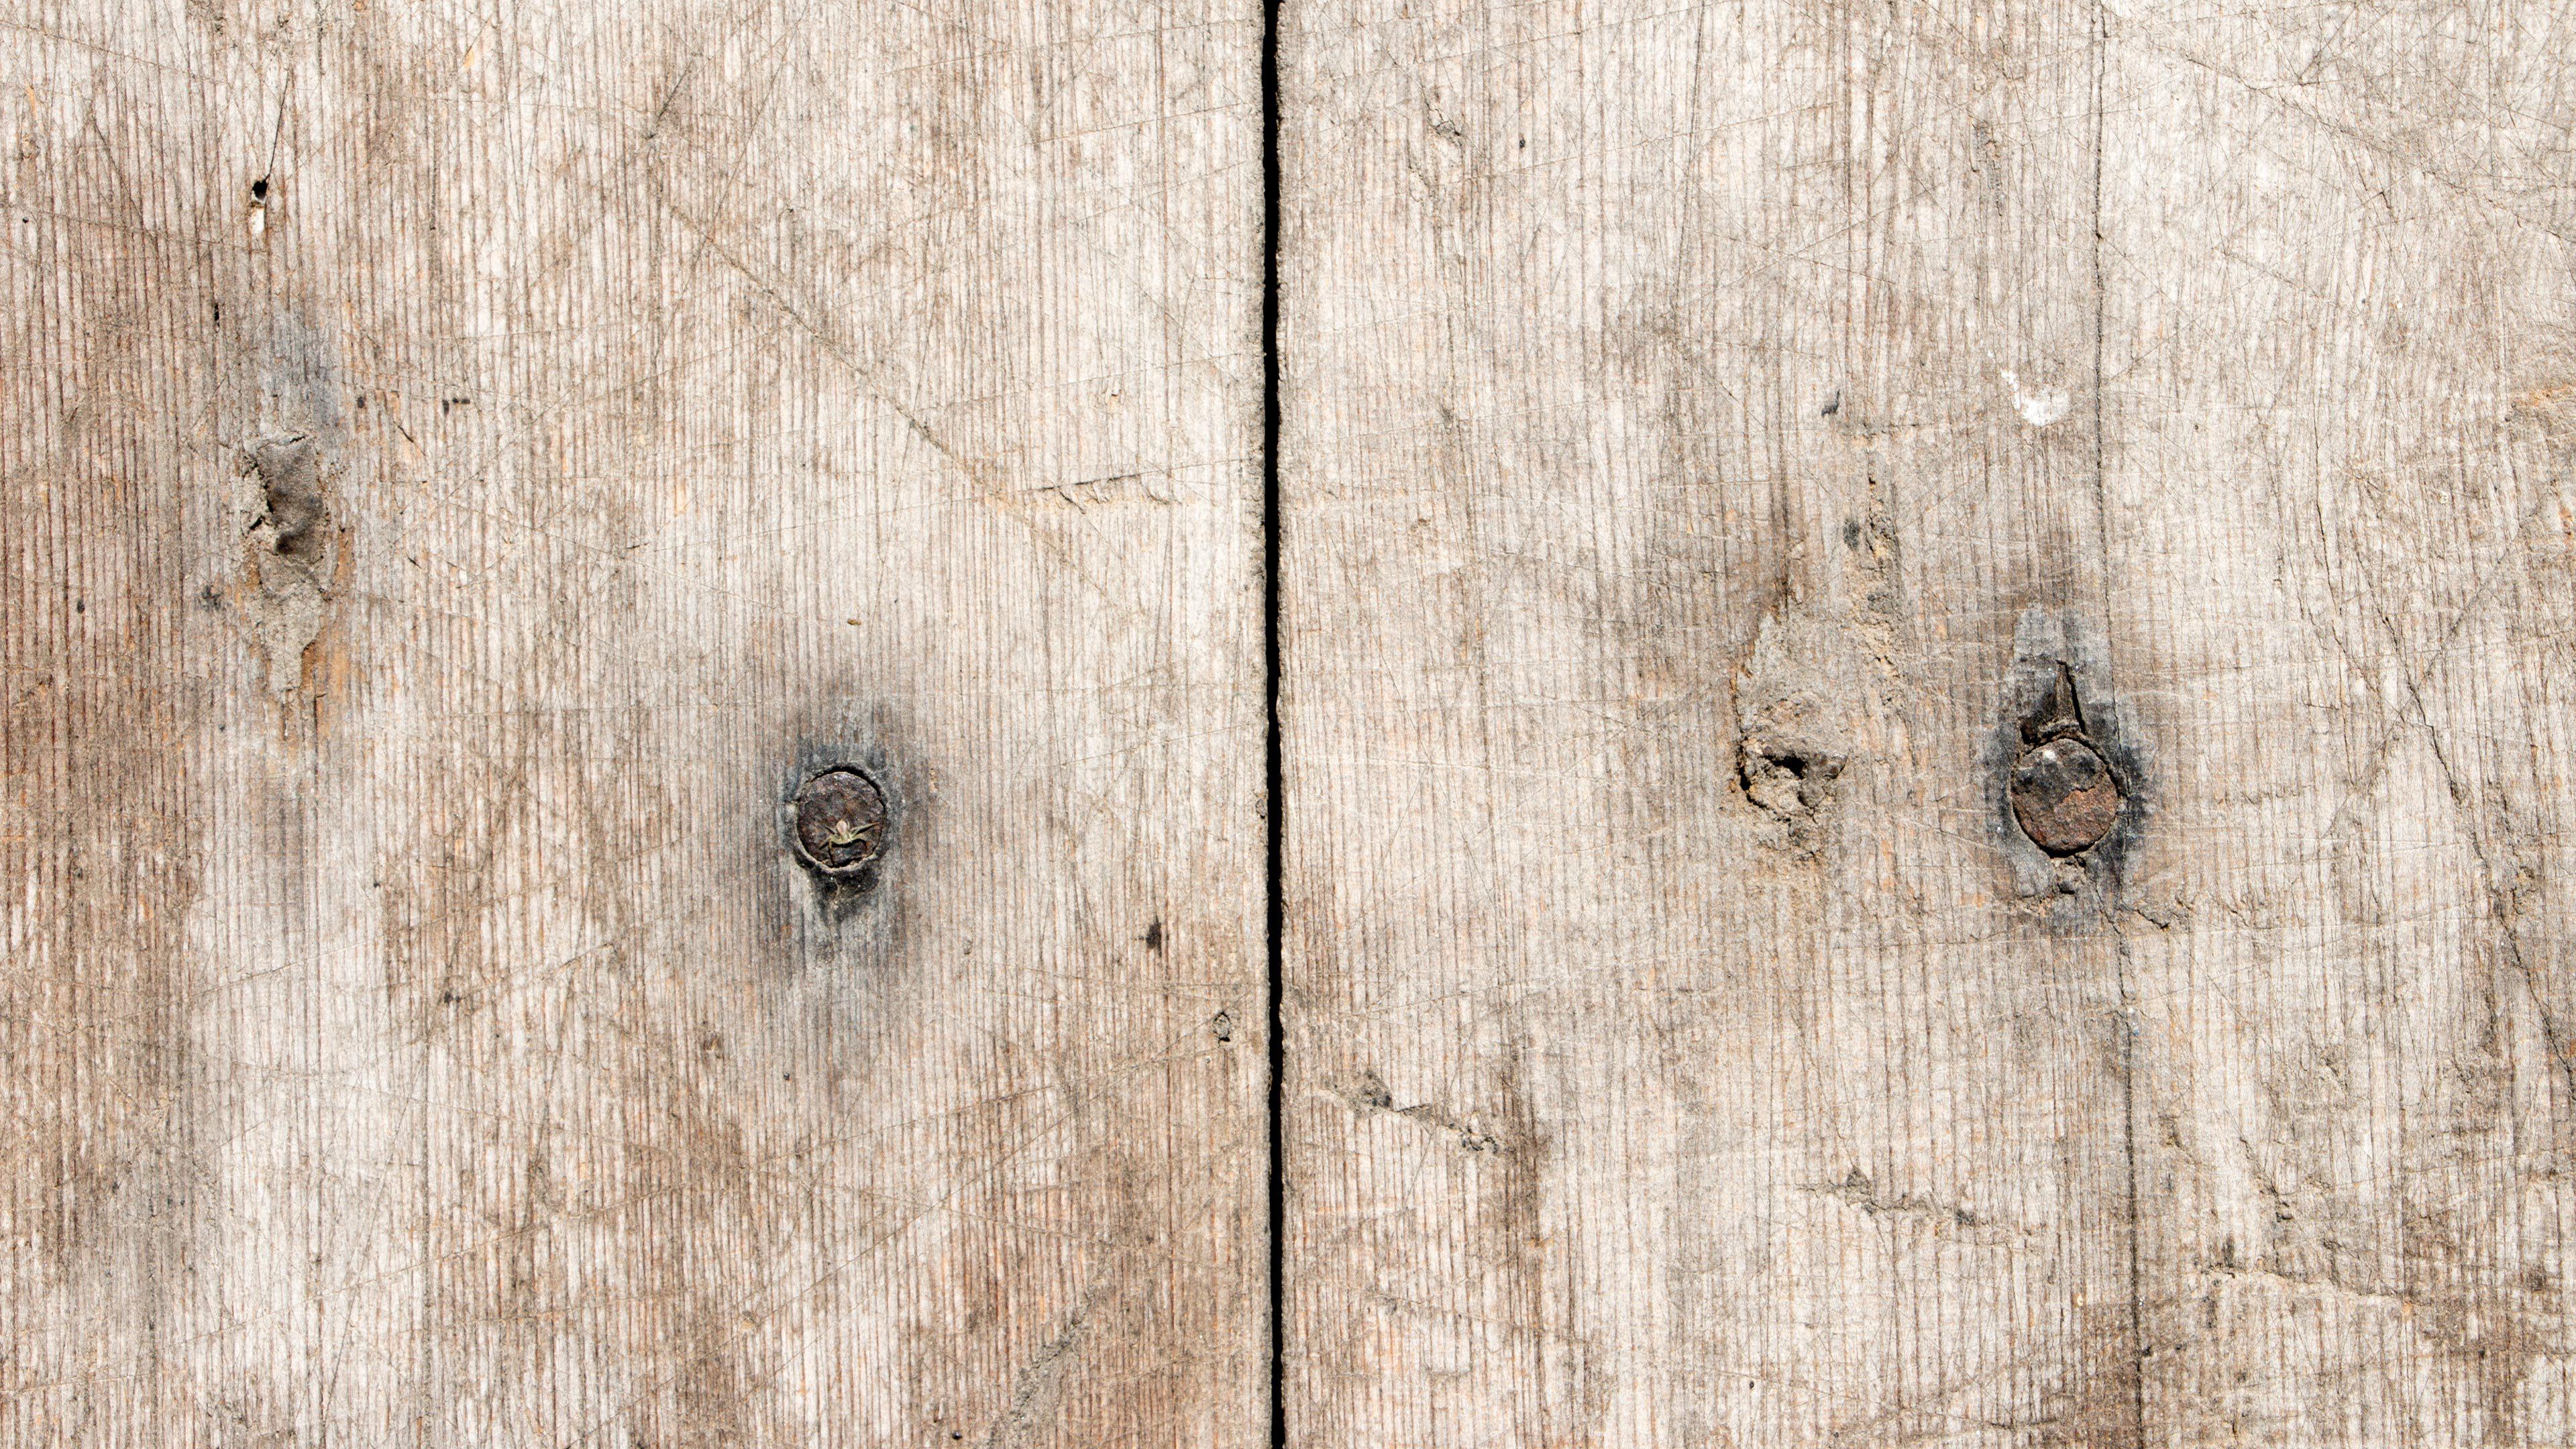 Wood Photography Nail Rusty nails in old wood HD Wallpaper, Desktop